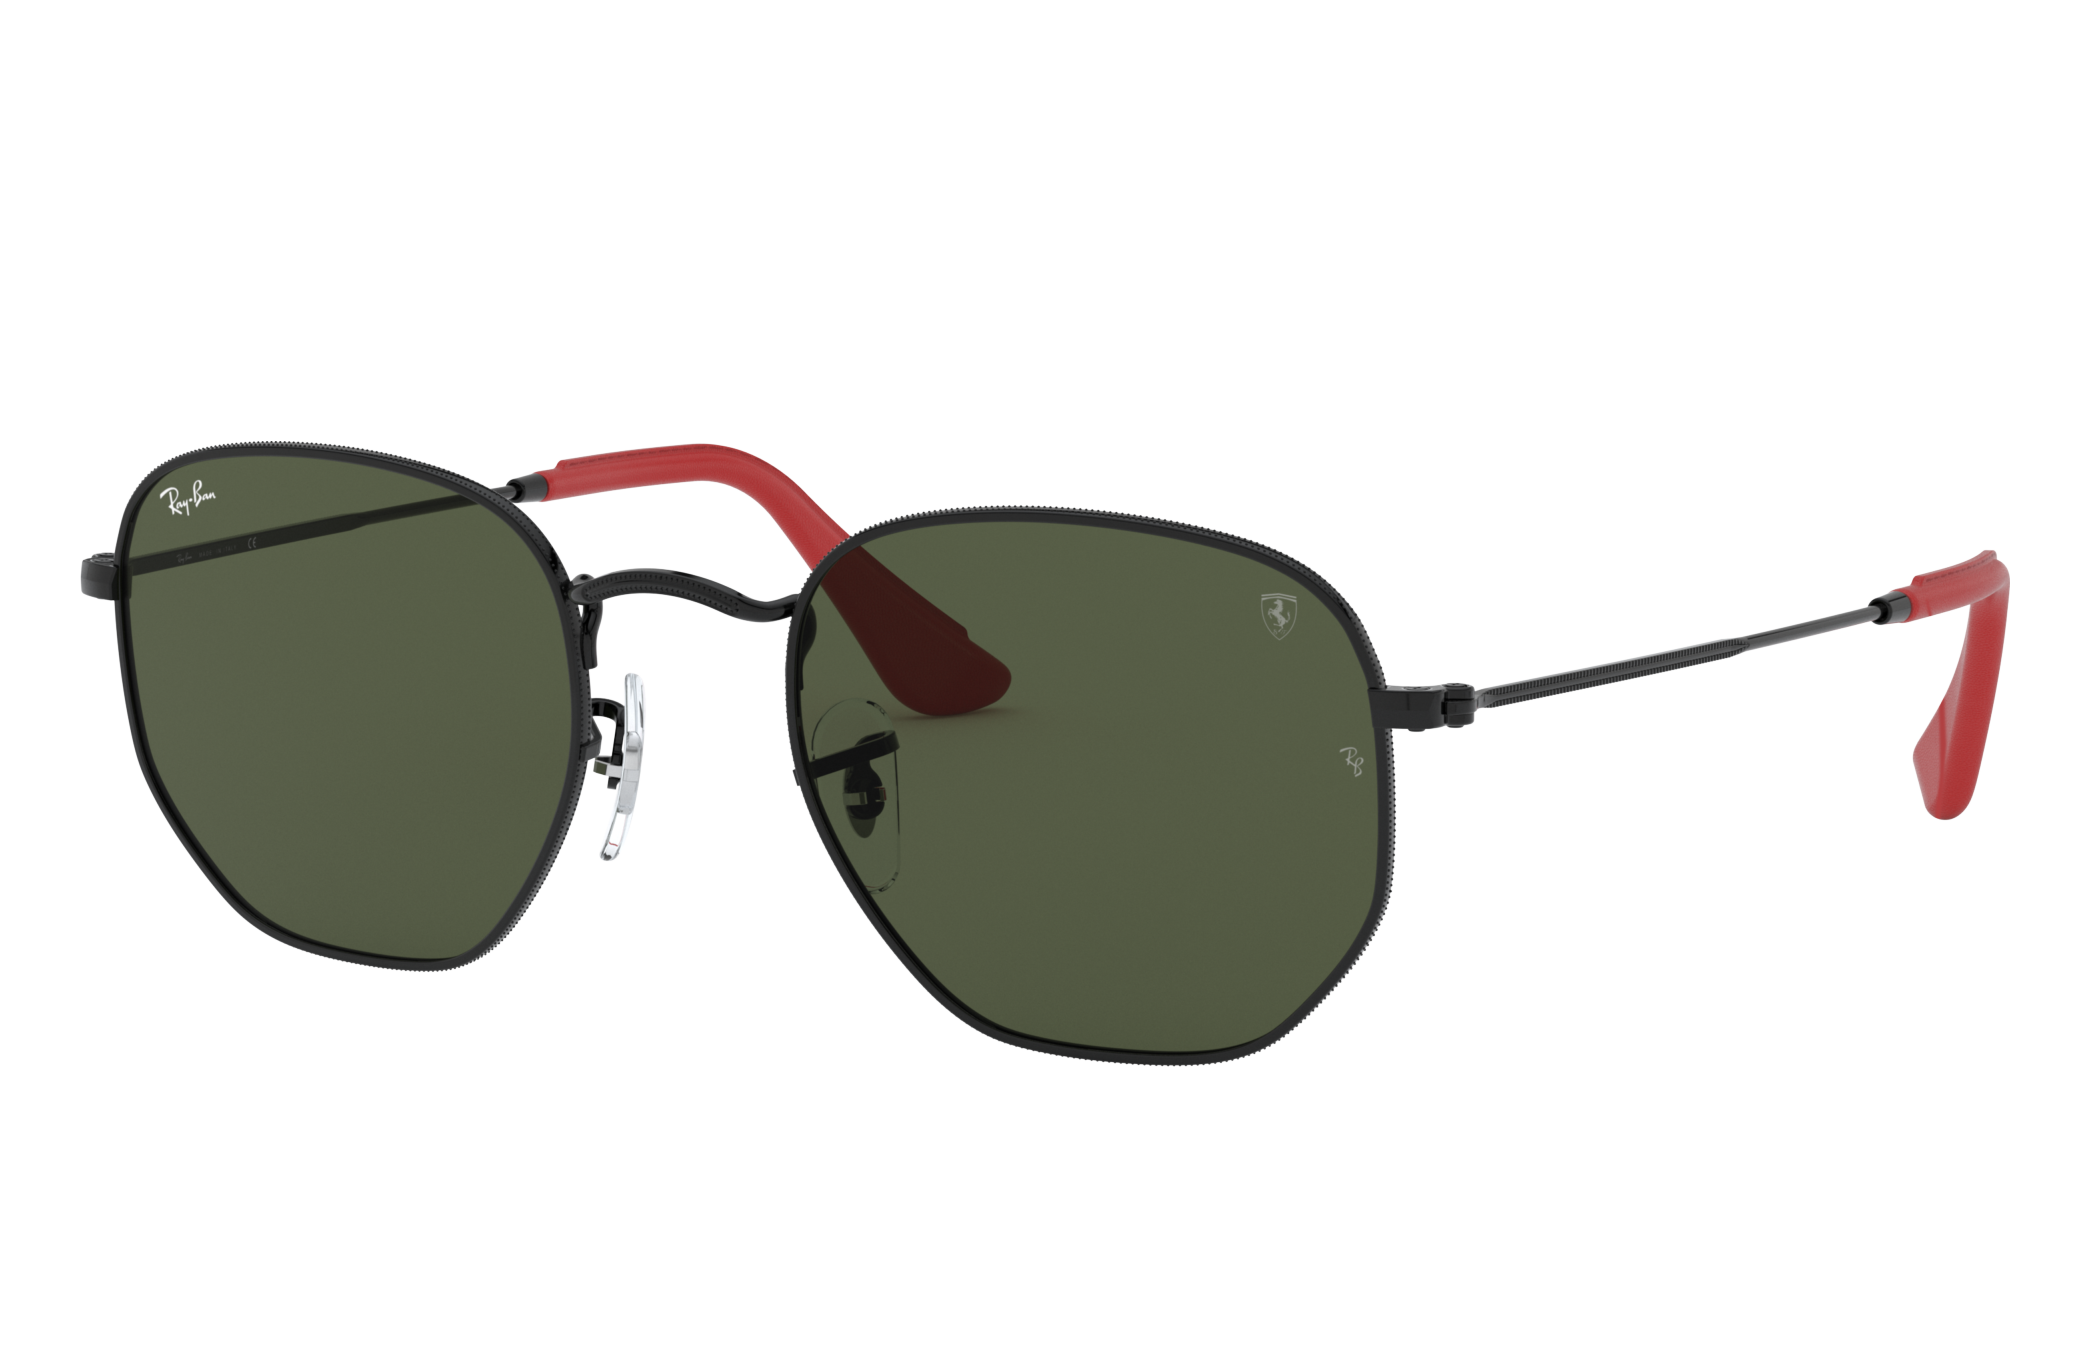 Rb3548nm Scuderia Ferrari Collection Sunglasses in Black and Green | Ray-Ban ®